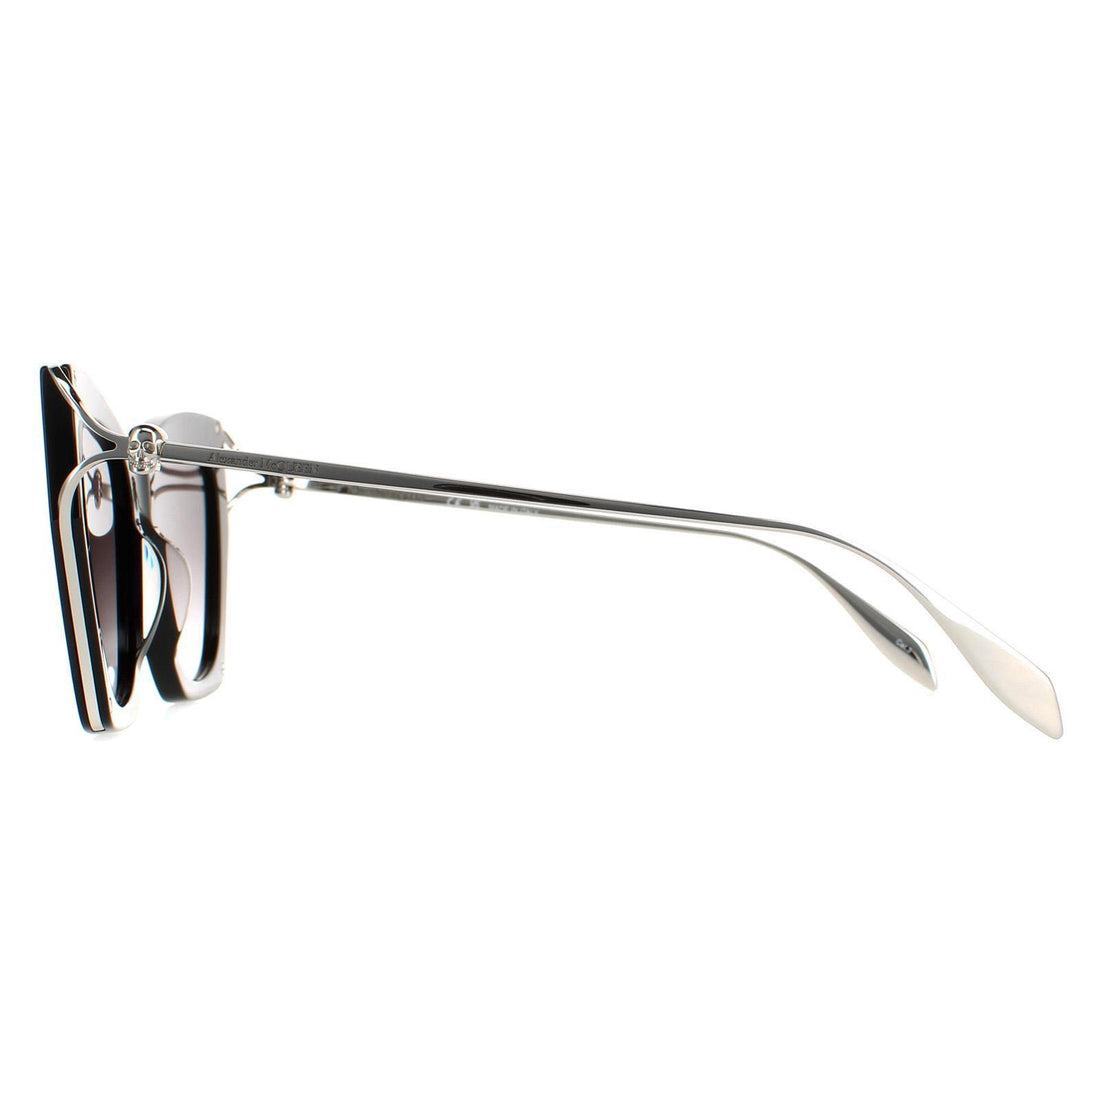 Alexander McQueen Sunglasses AM0375S 001 Black Silver Grey Gradient